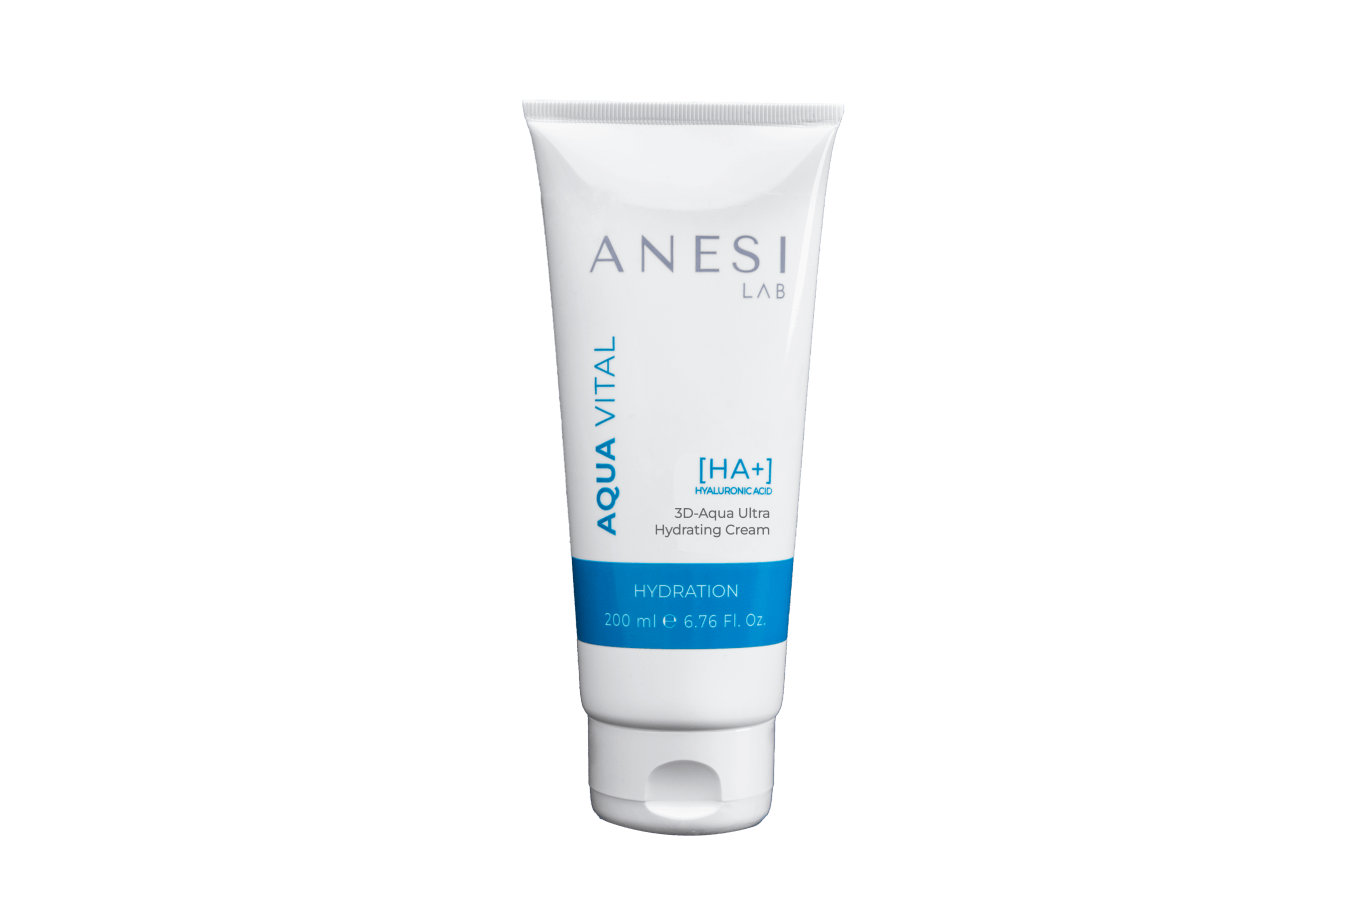 ANESI HA+ 3D-Aqua Vital Ultra Hydrating Cream 200ml